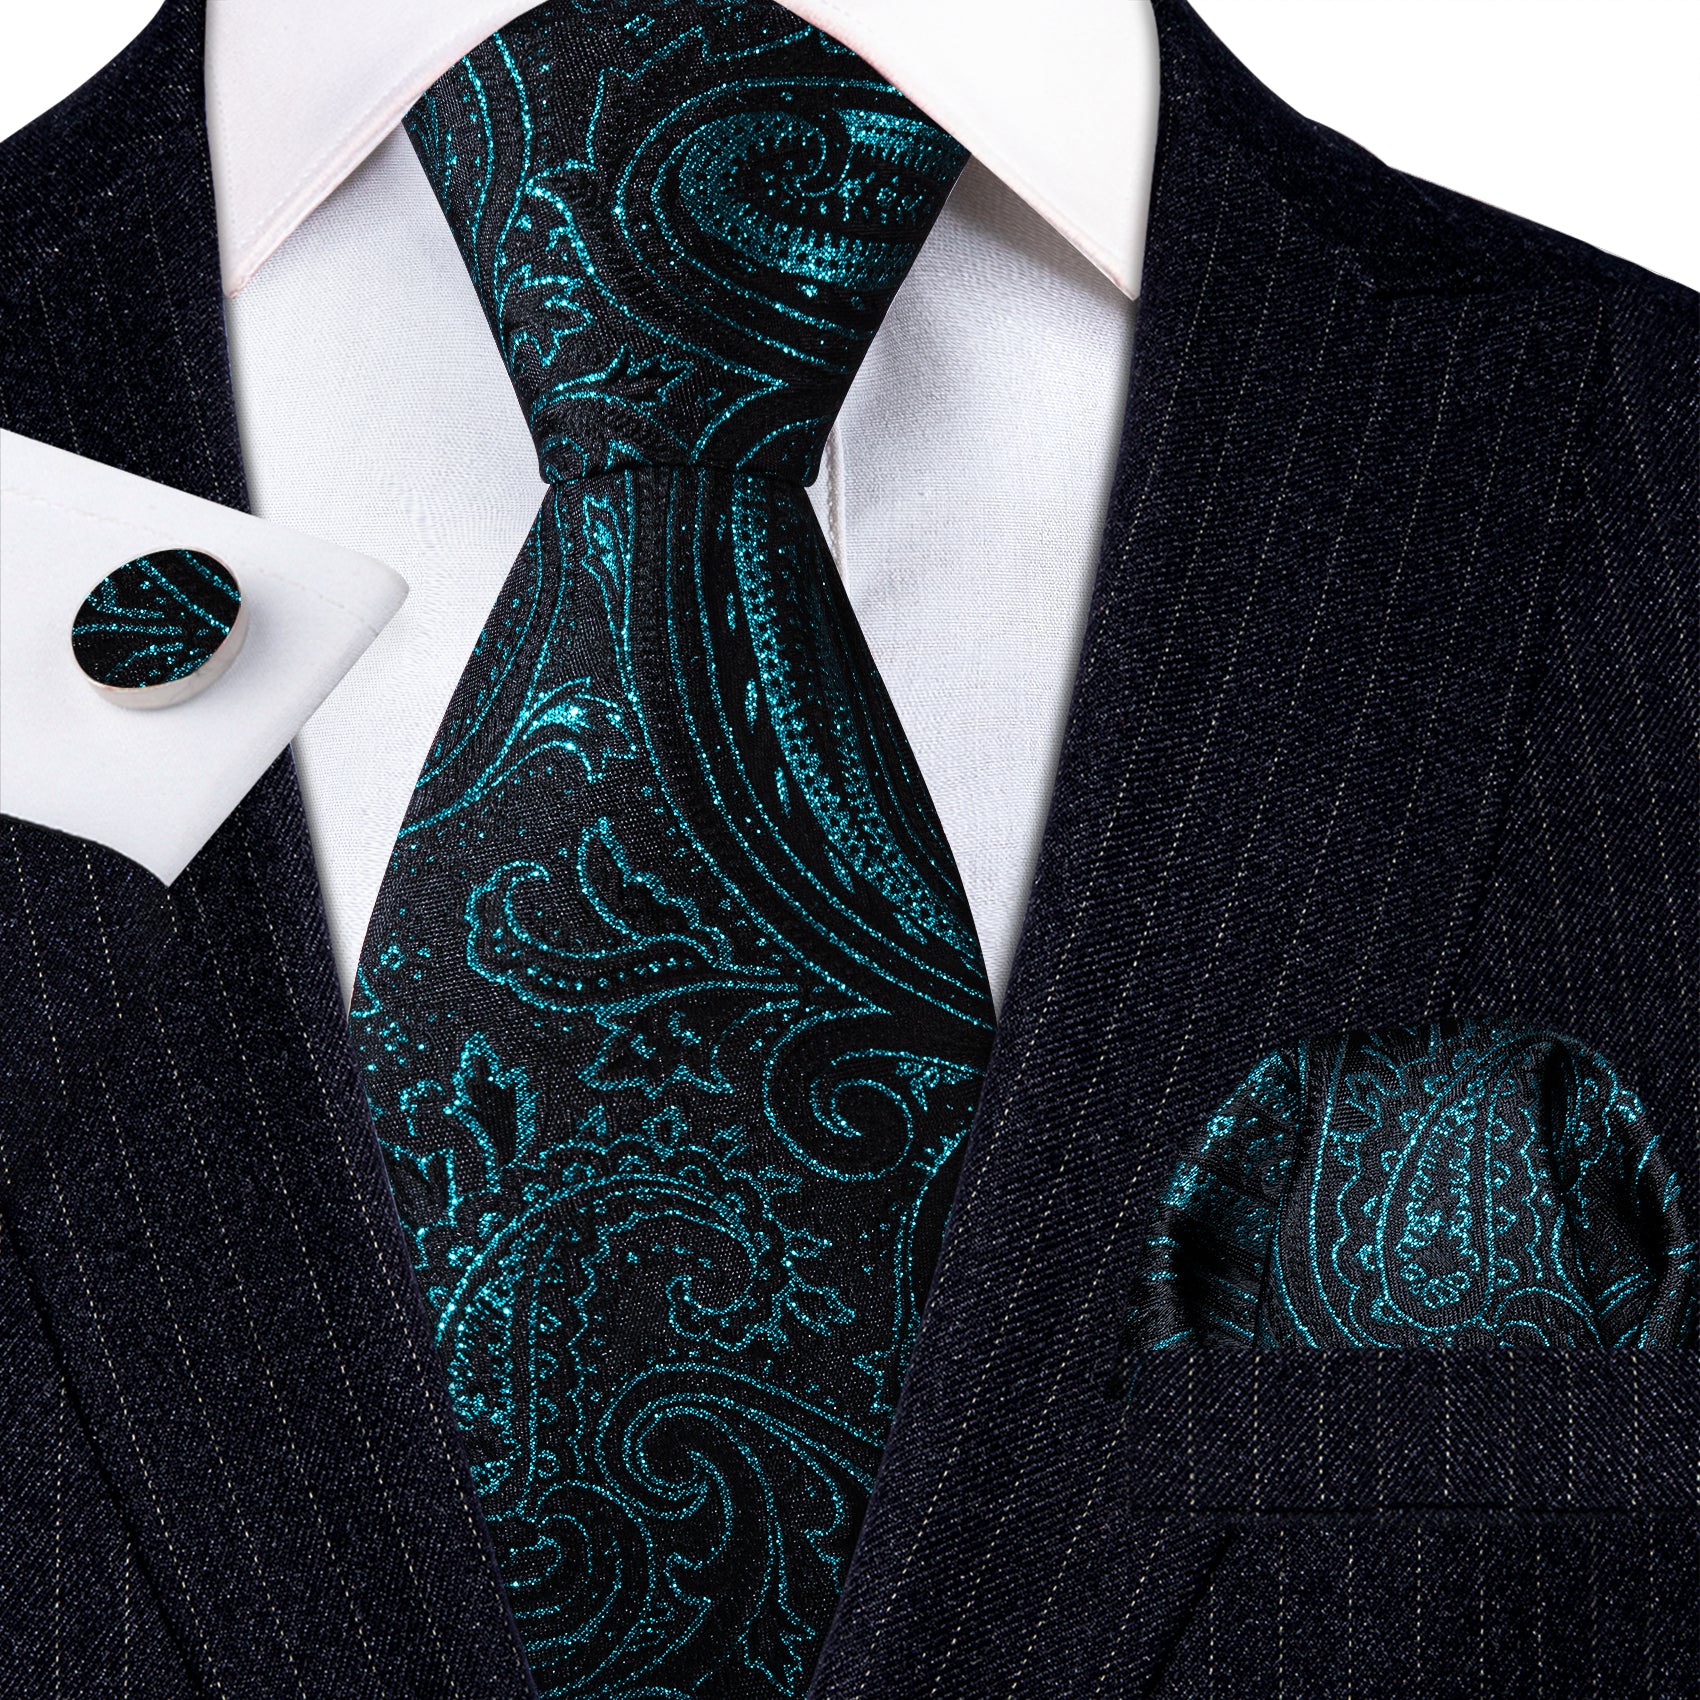 Deep Green Paisley Silk Tie Handkerchief Cufflinks Set